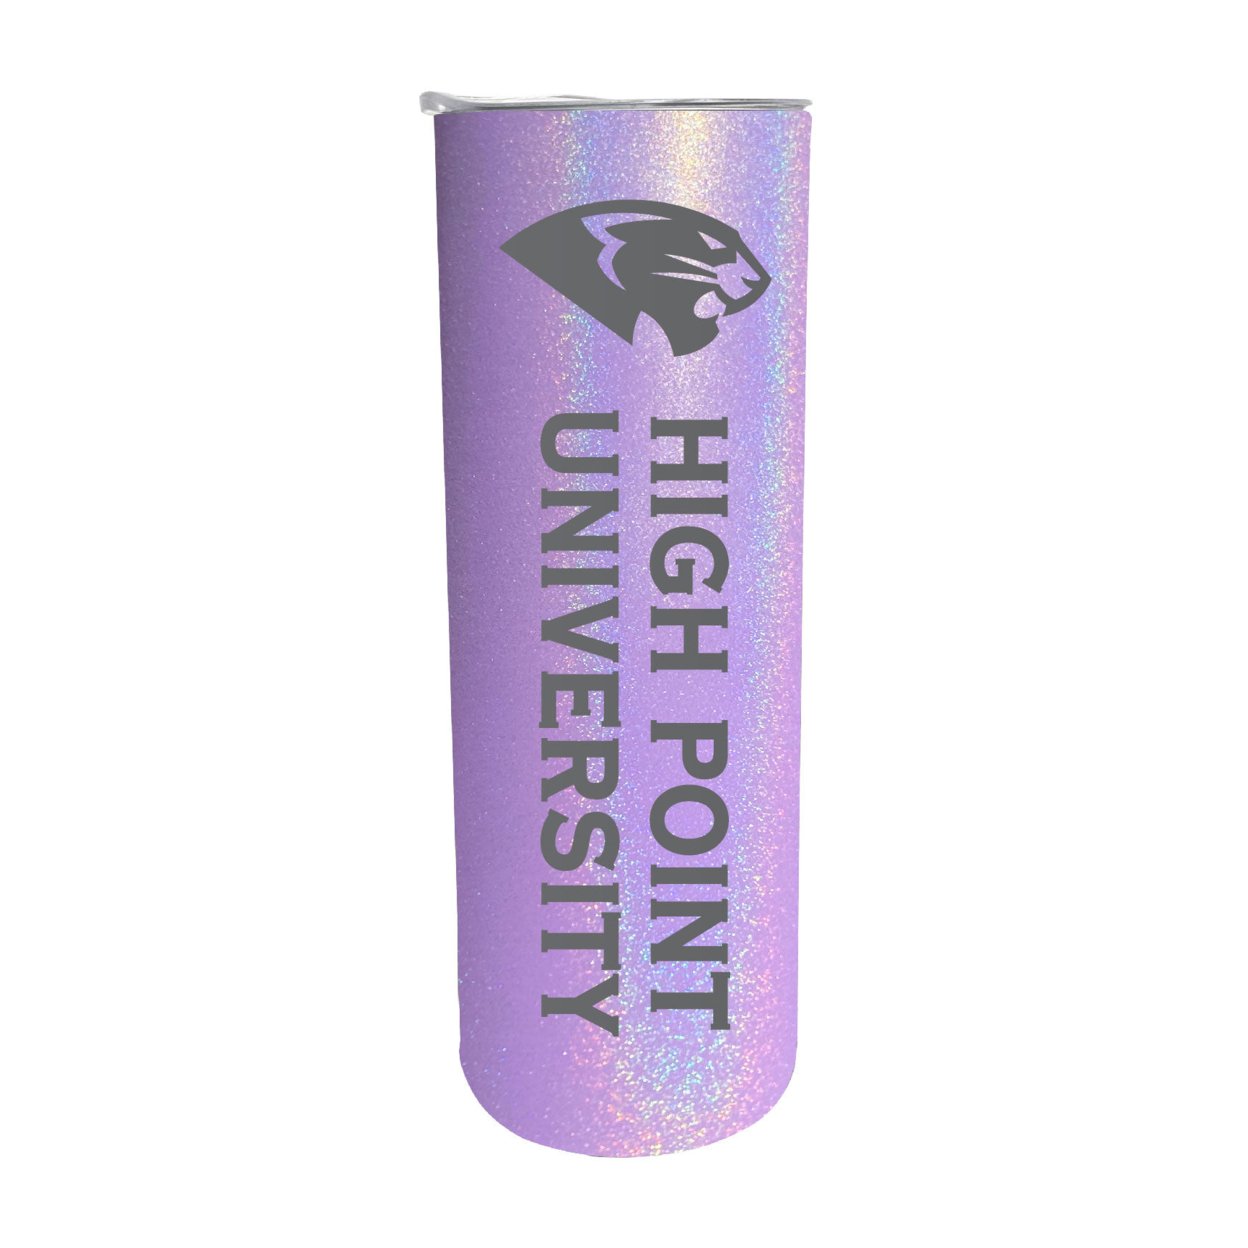 High Point University 20oz Insulated Stainless Steel Skinny Tumbler - Rainbow Glitter Purple